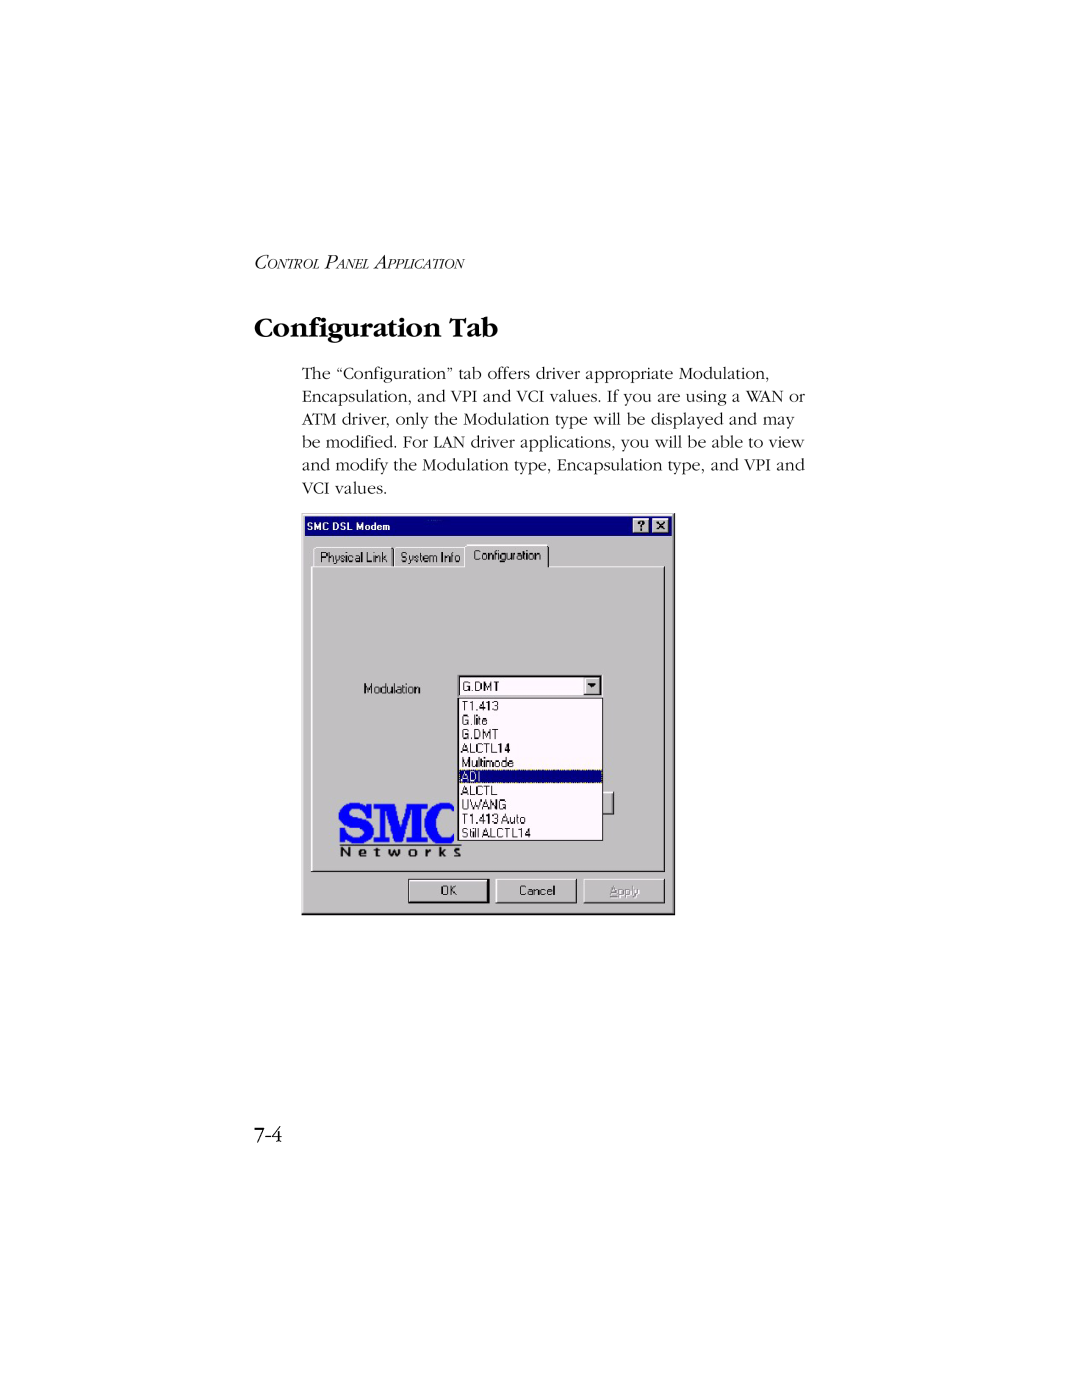 SMC Networks SMC7003-USB manual Configuration Tab, Control Panel Application 